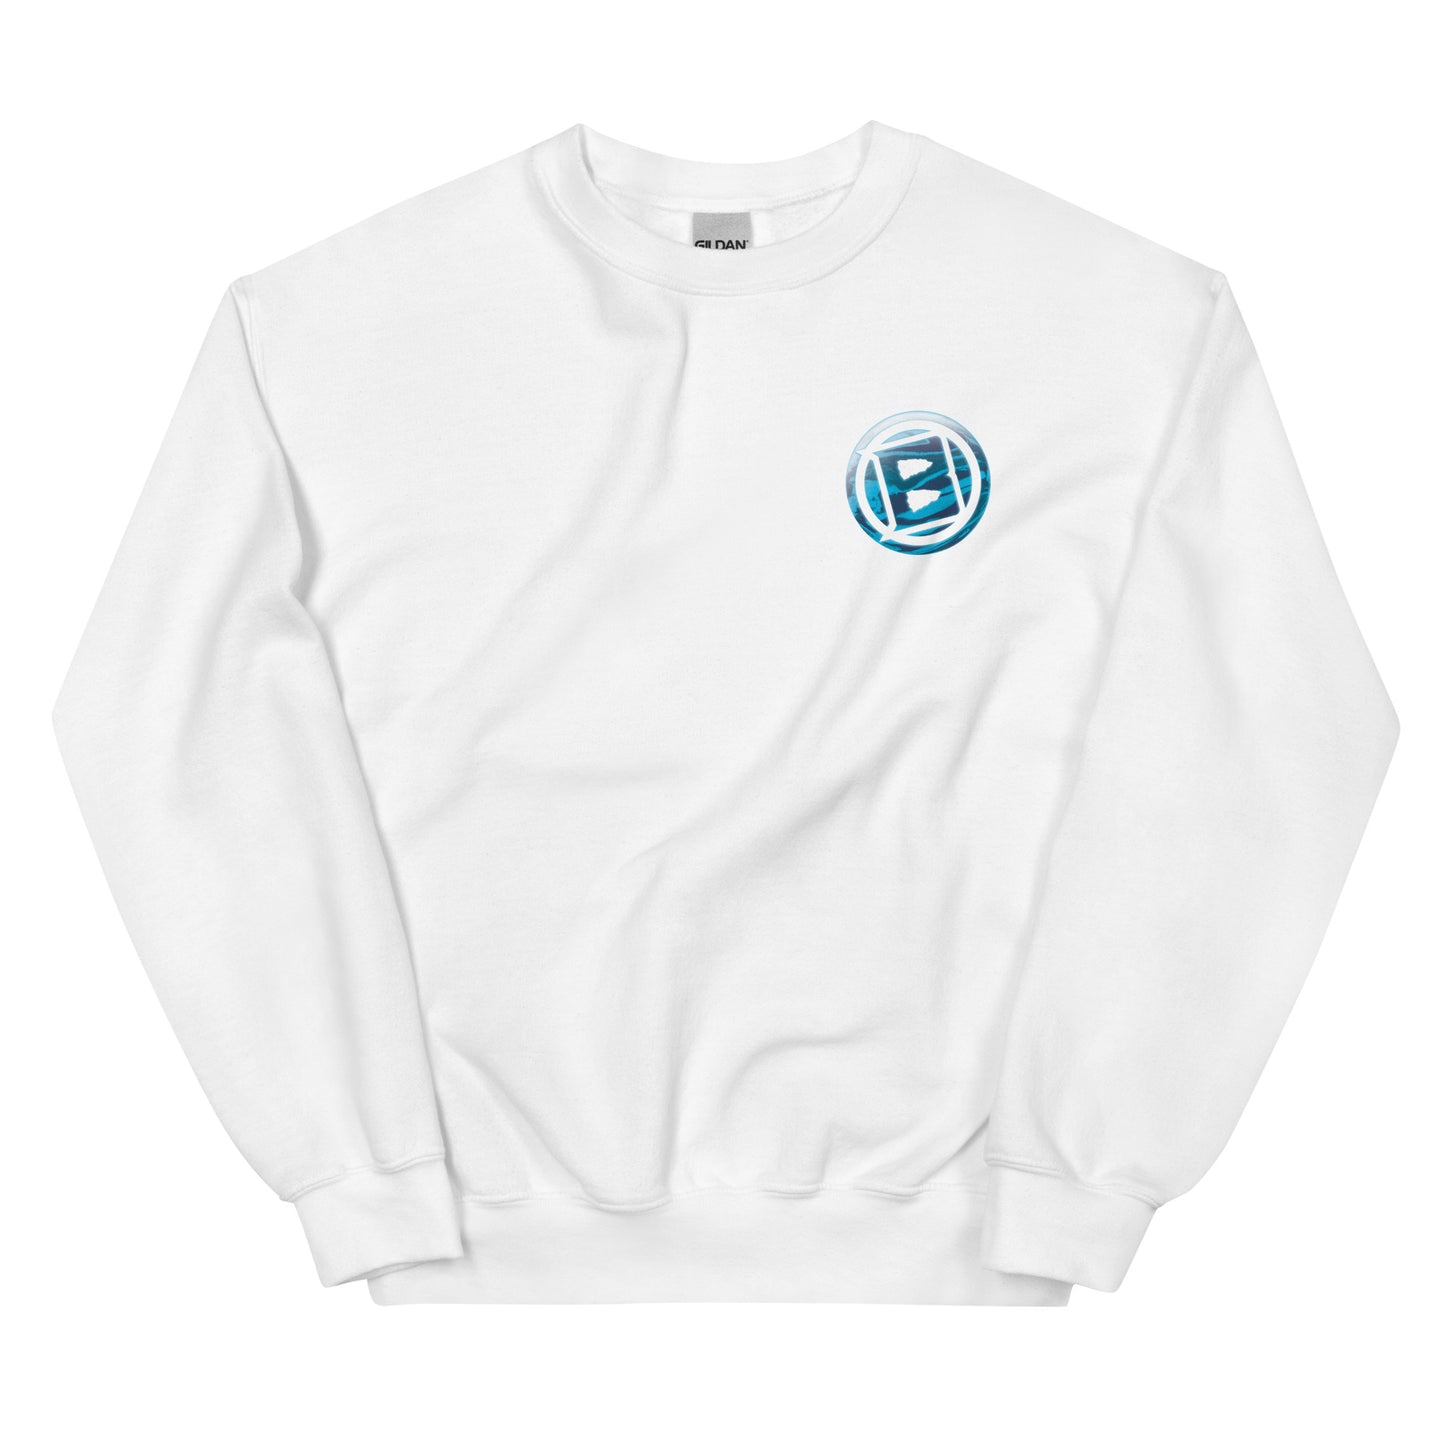 ThaBeast - Unisex Sweatshirt - Watery B Logo